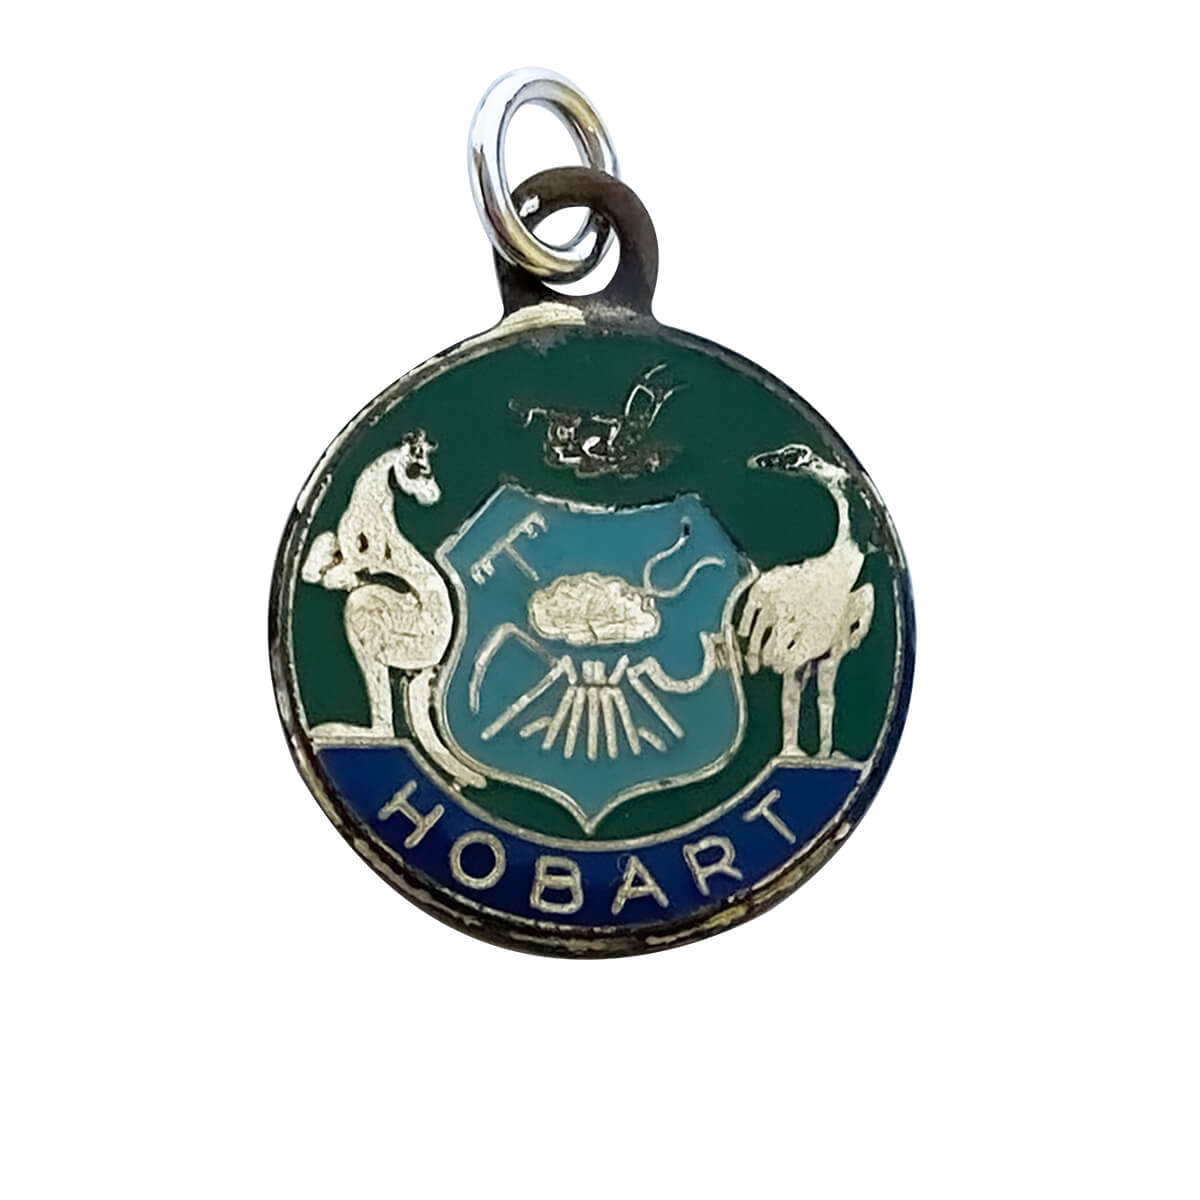 Vintage Hobart Travel Souvenir Charm or pendant